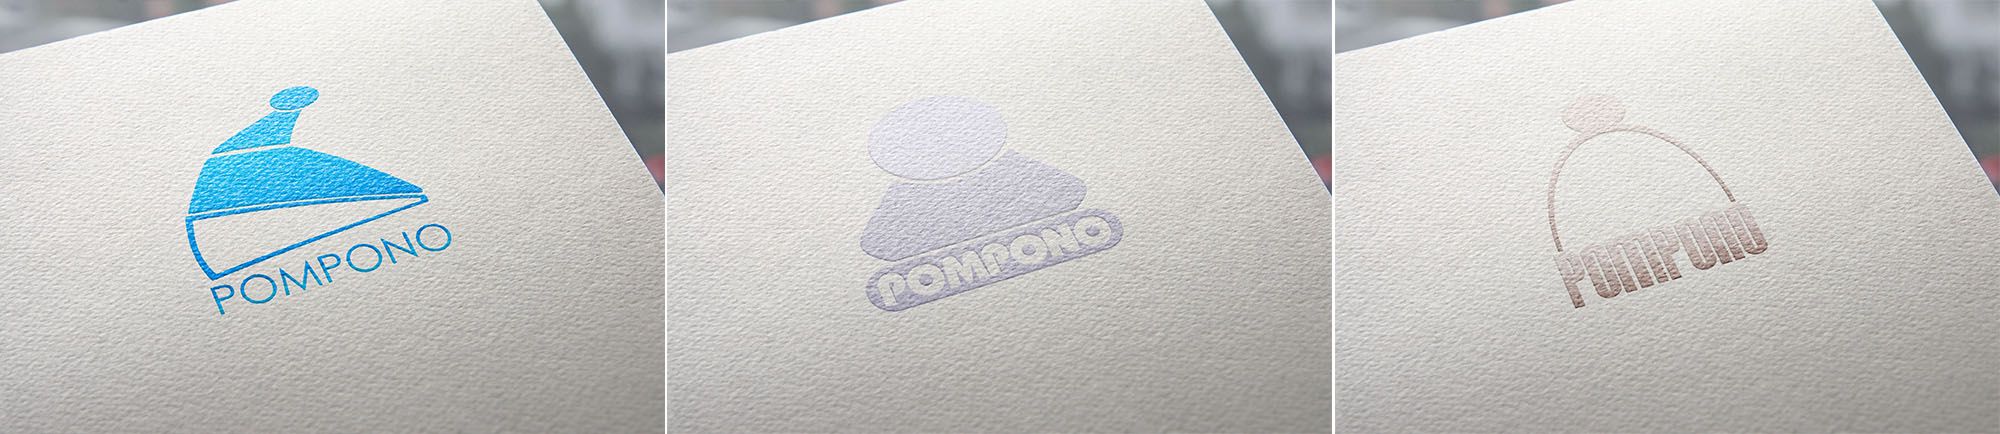 Логотип для шапок Pompono - дизайнер NateRiver